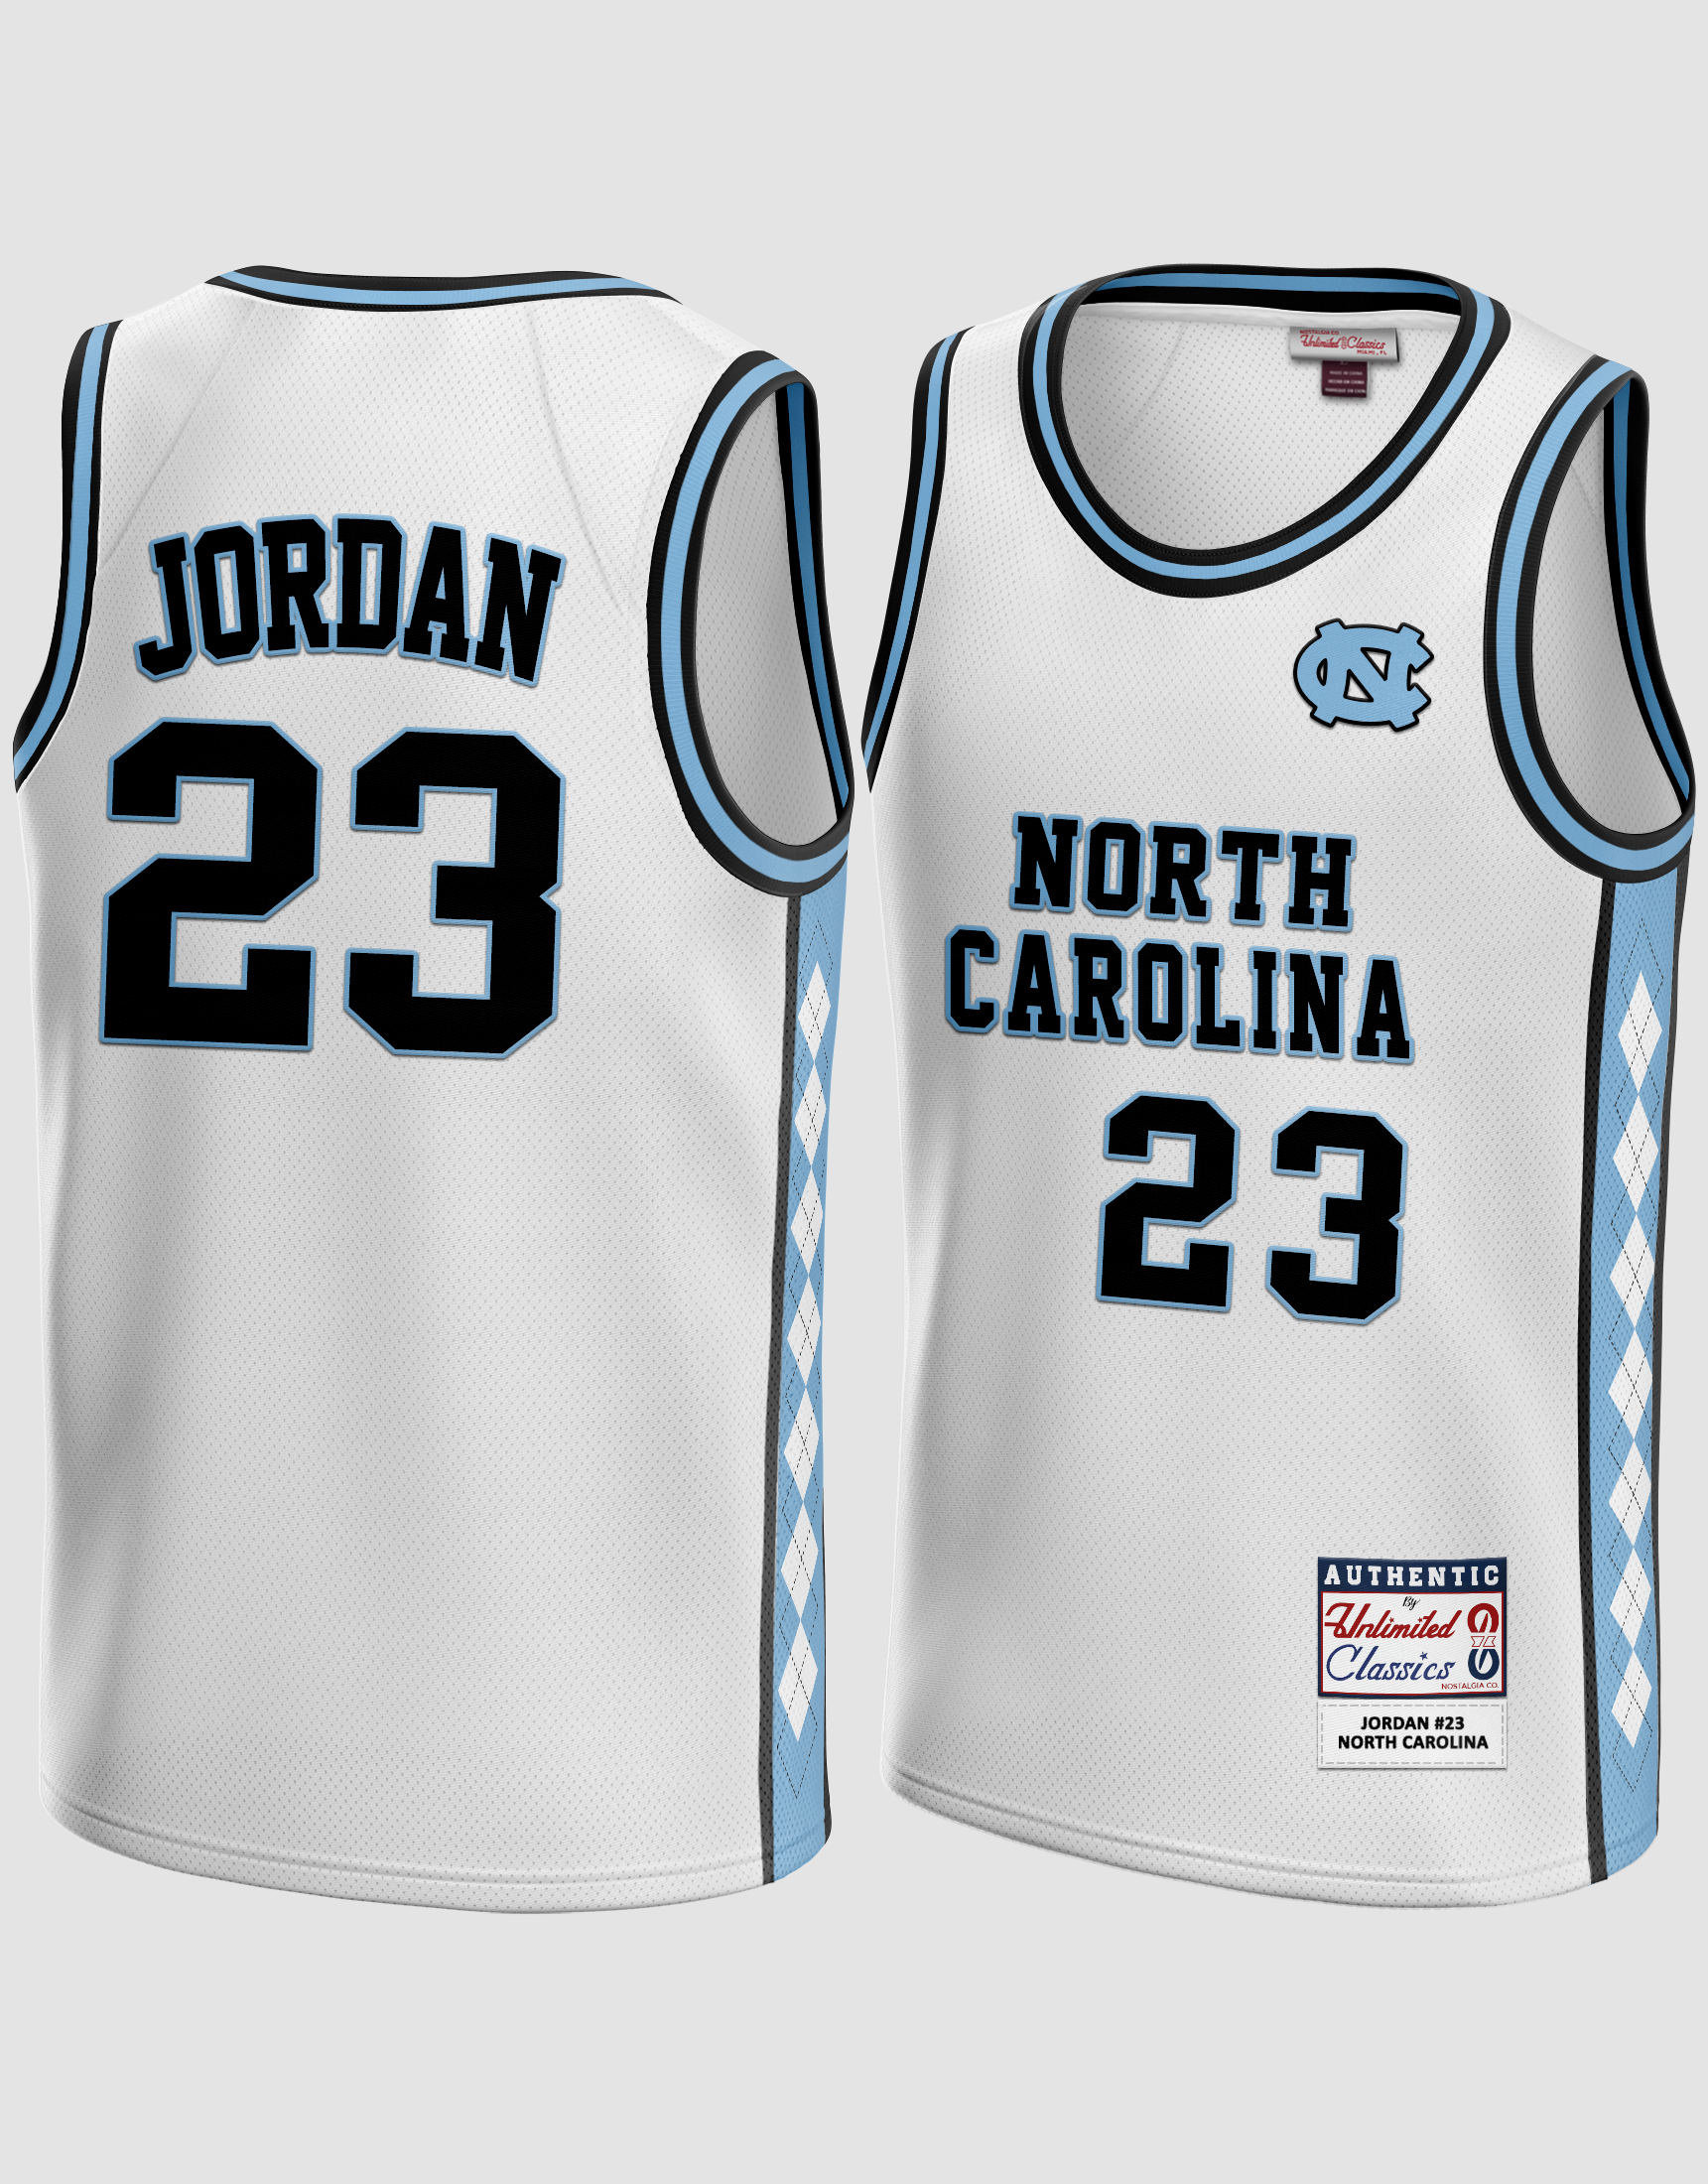 Jordan 23 Basketball Jersey